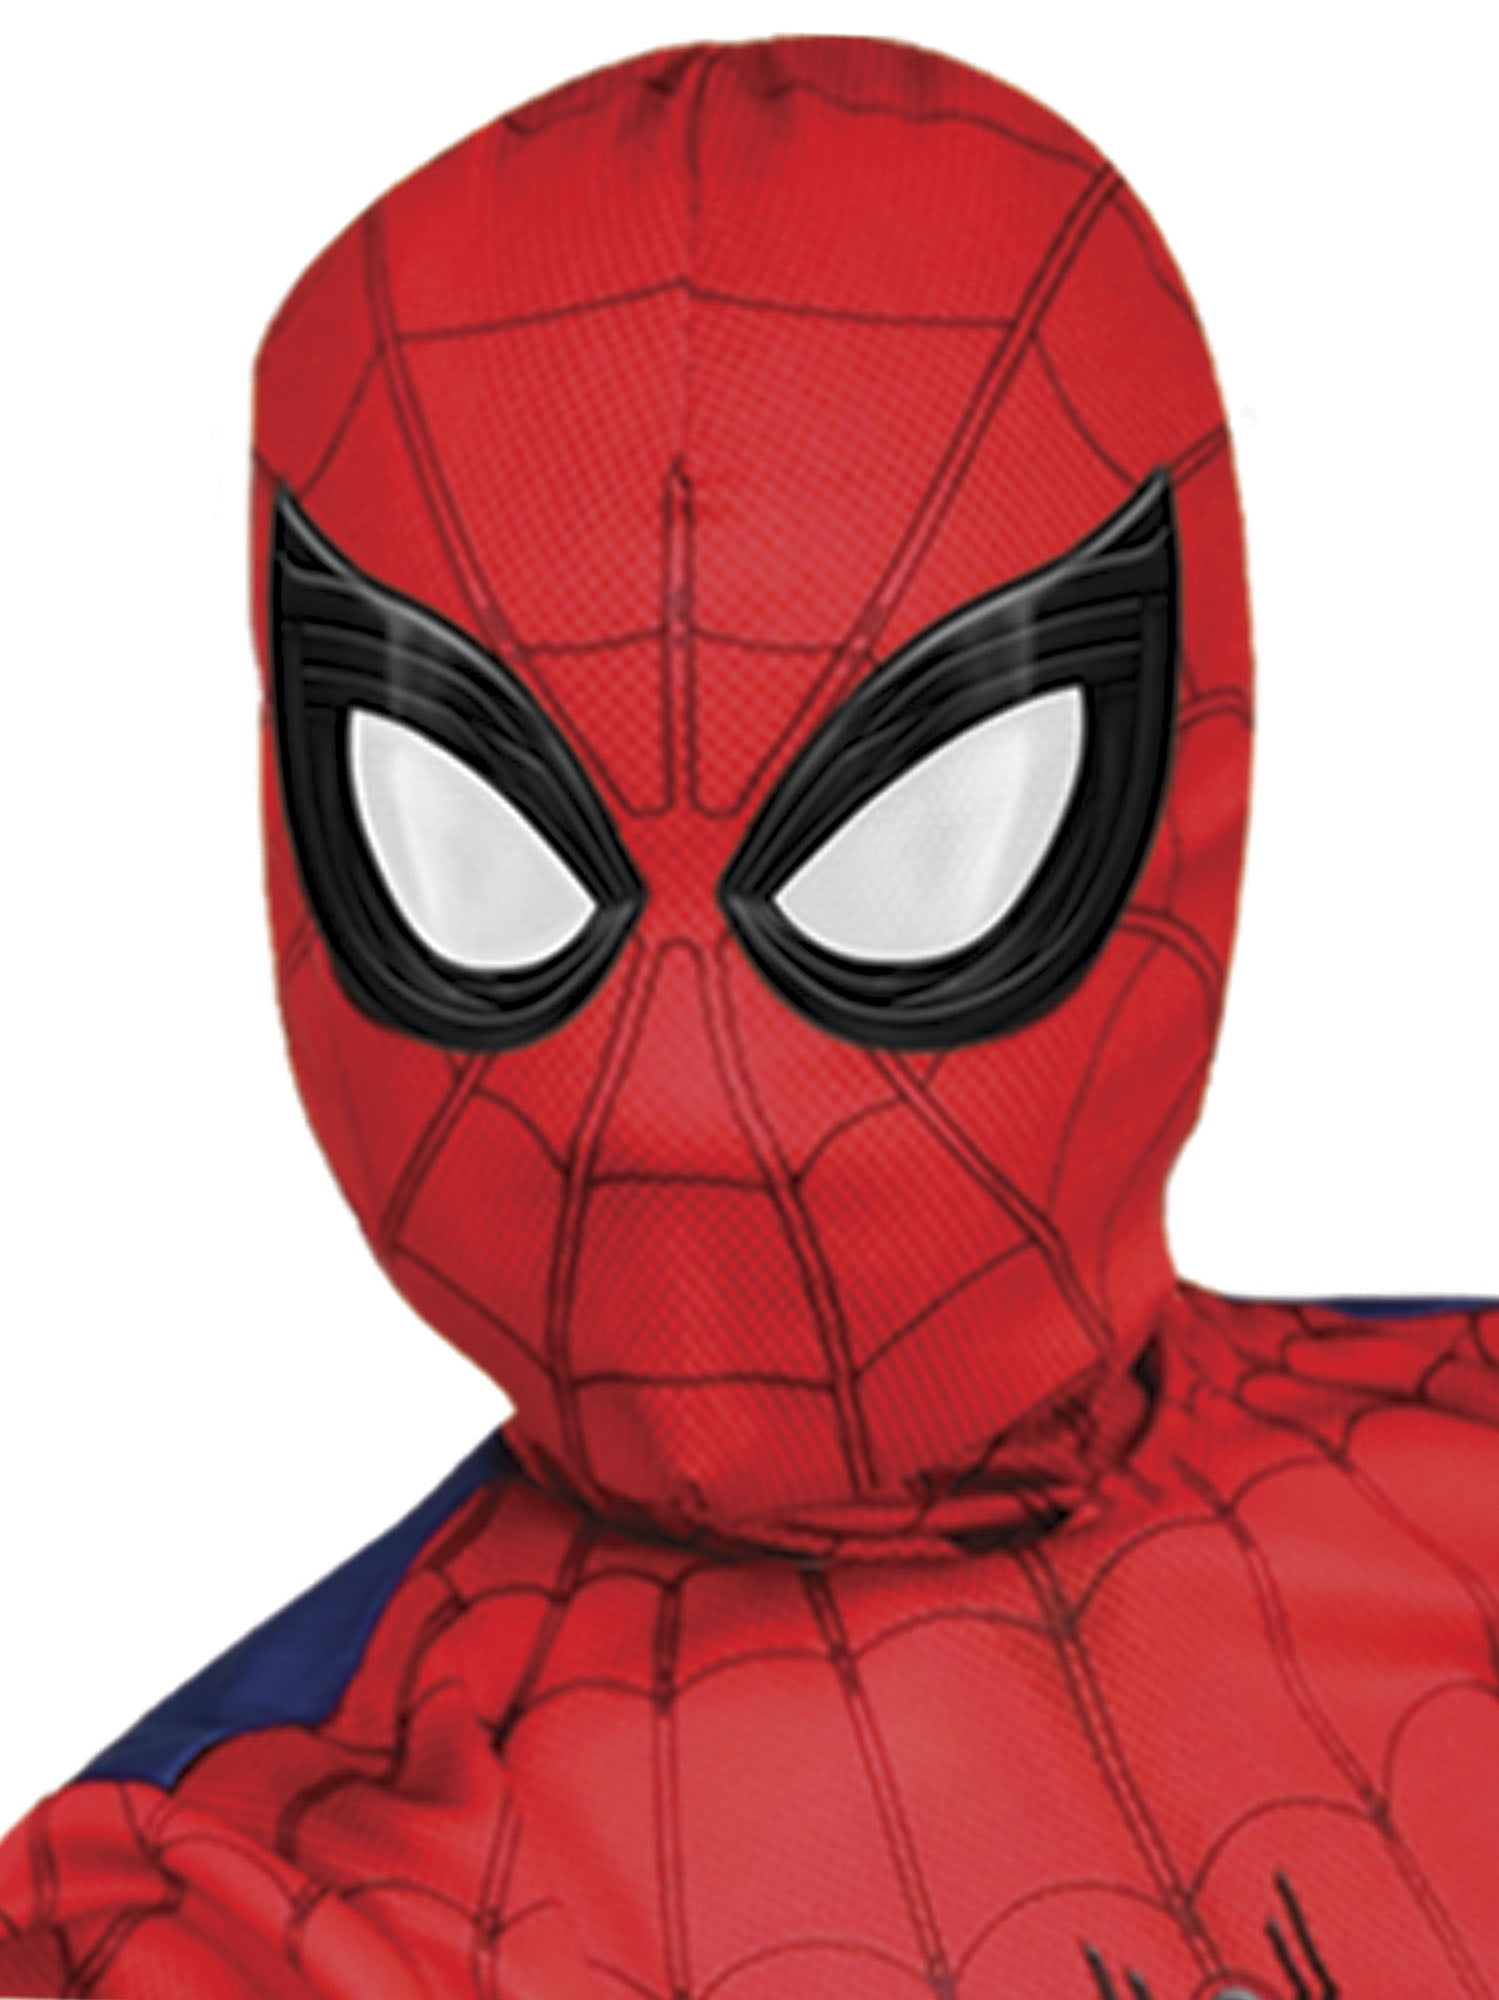 Spider-Man Marvel Deco Unisexe Poster Multicolore Papier 61 x 91,5